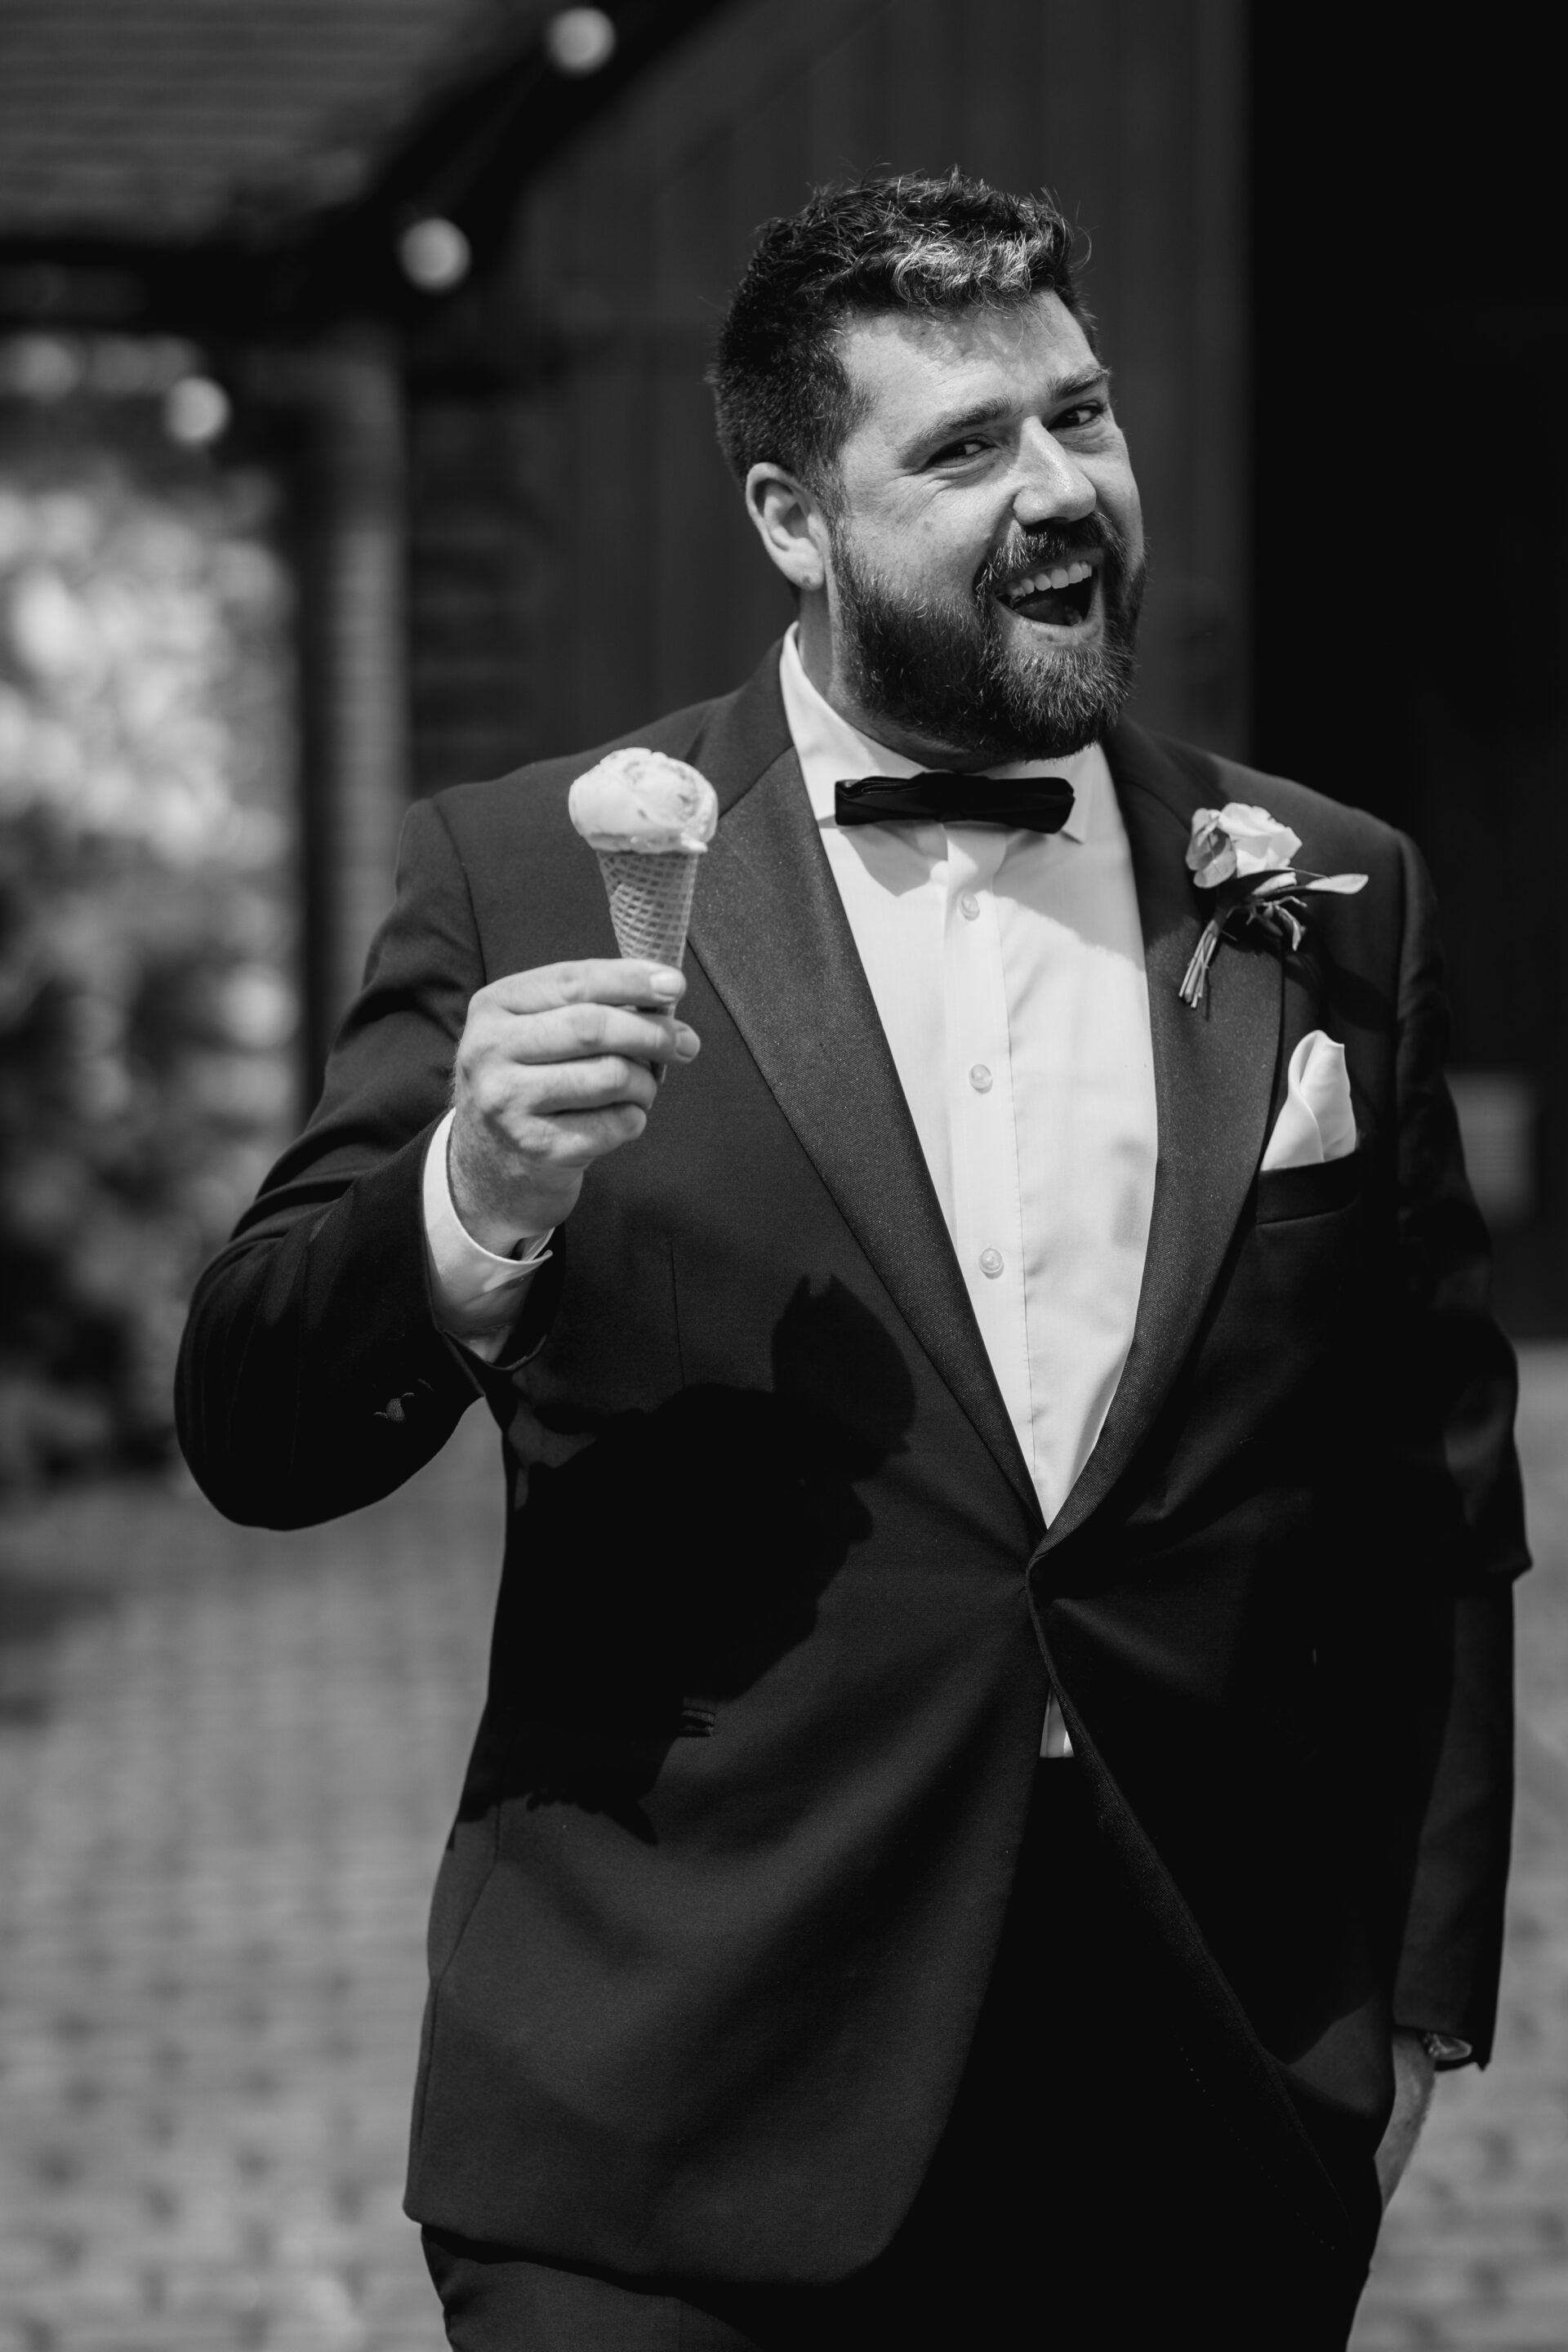 A wedding guest enjoys an ice cream